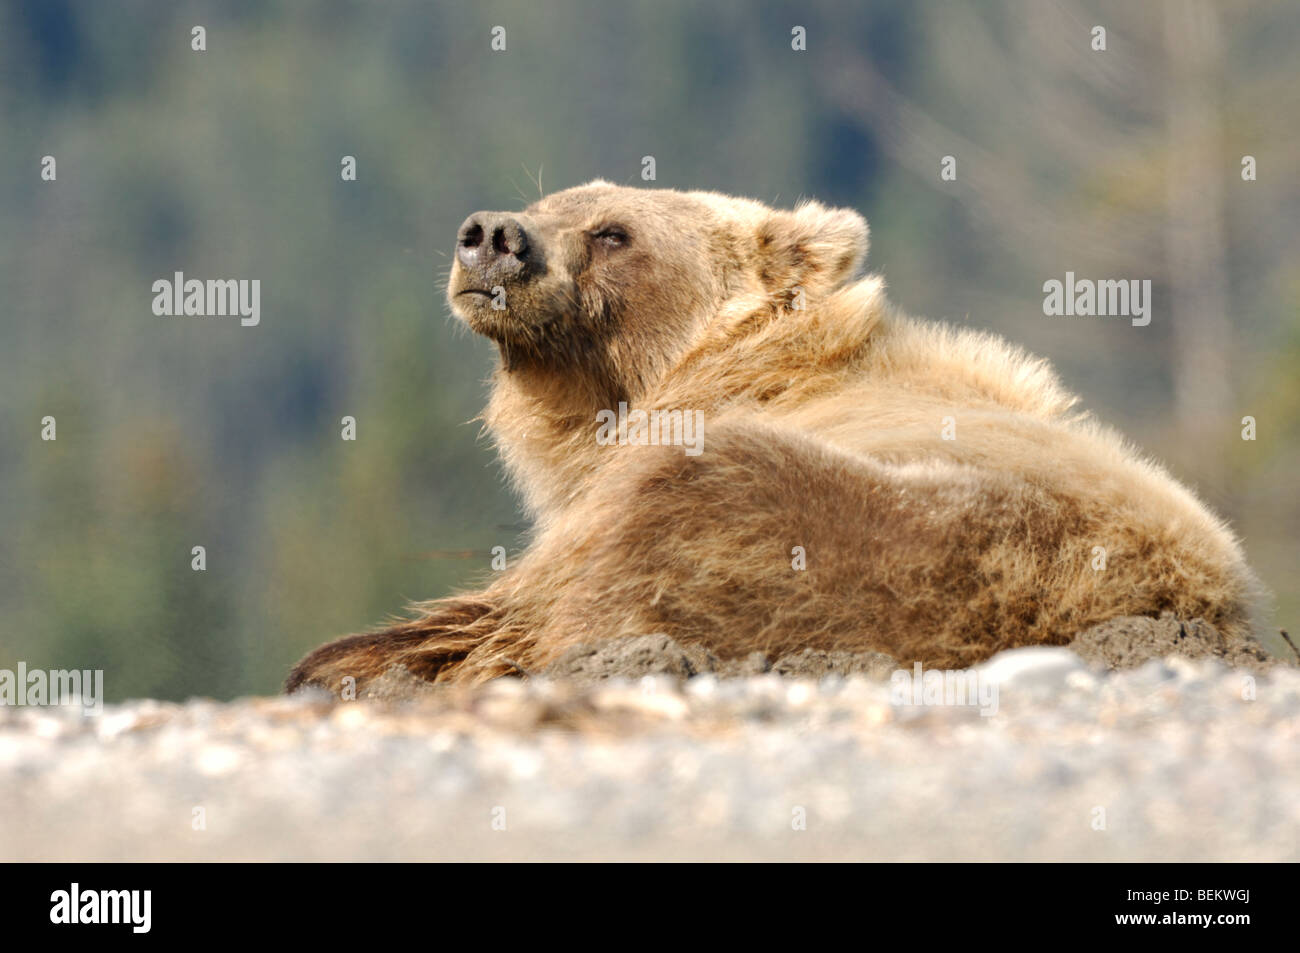 Stock Foto von einem Alaskan Braunbär zusammengerollt, Ruhe am Strand, Lake-Clark-Nationalpark, Alaska Stockfoto